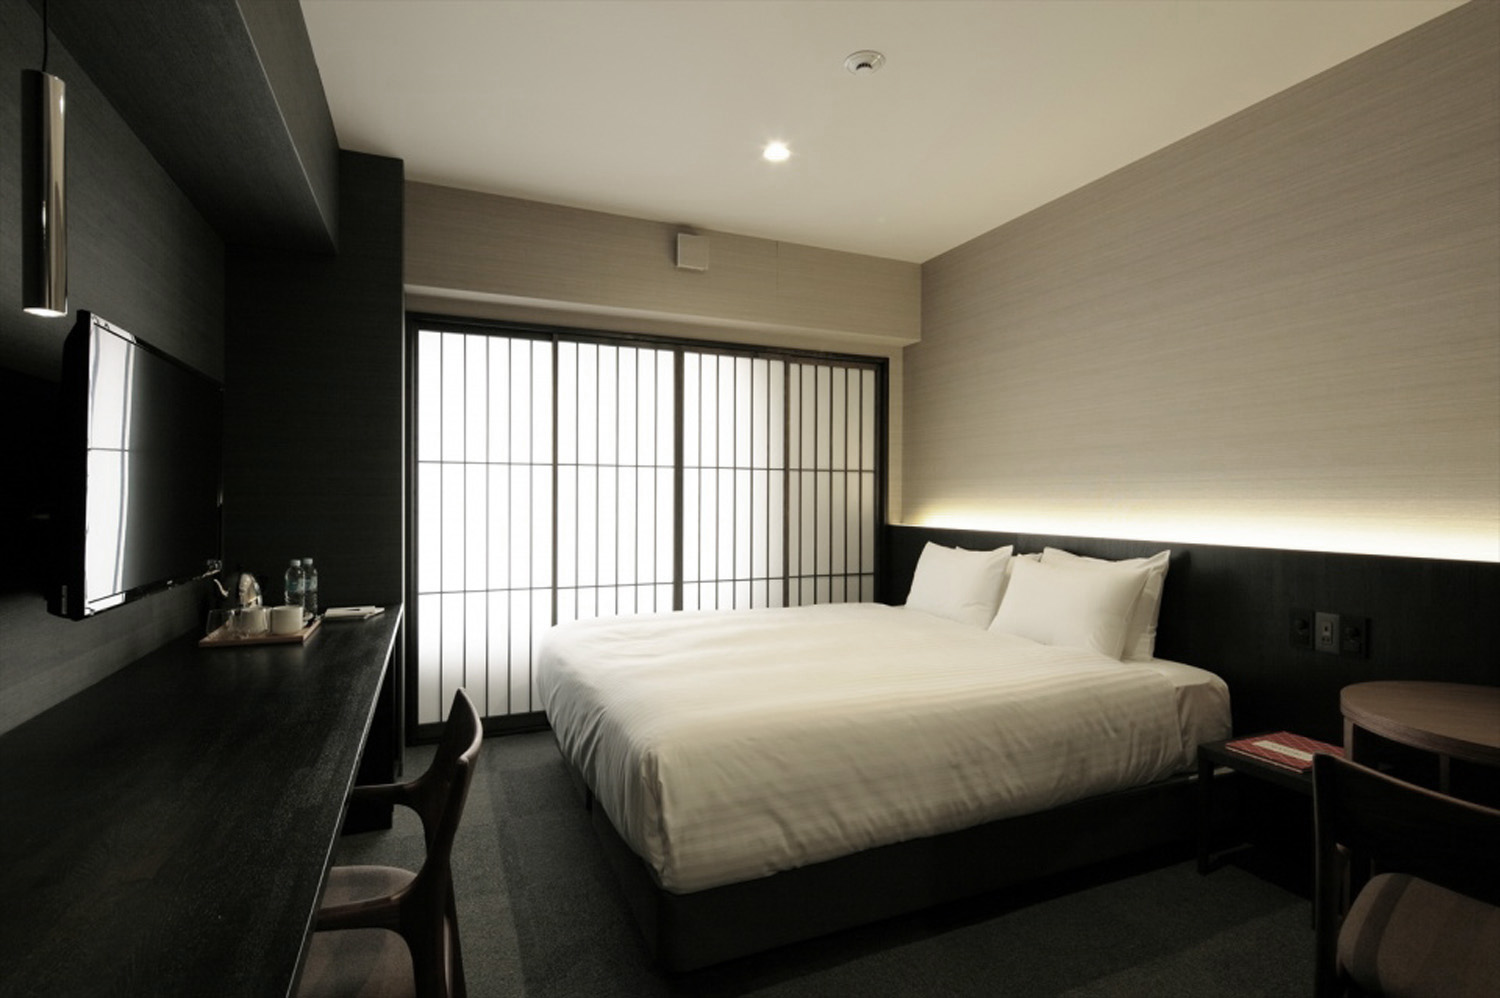 Hotel room space design